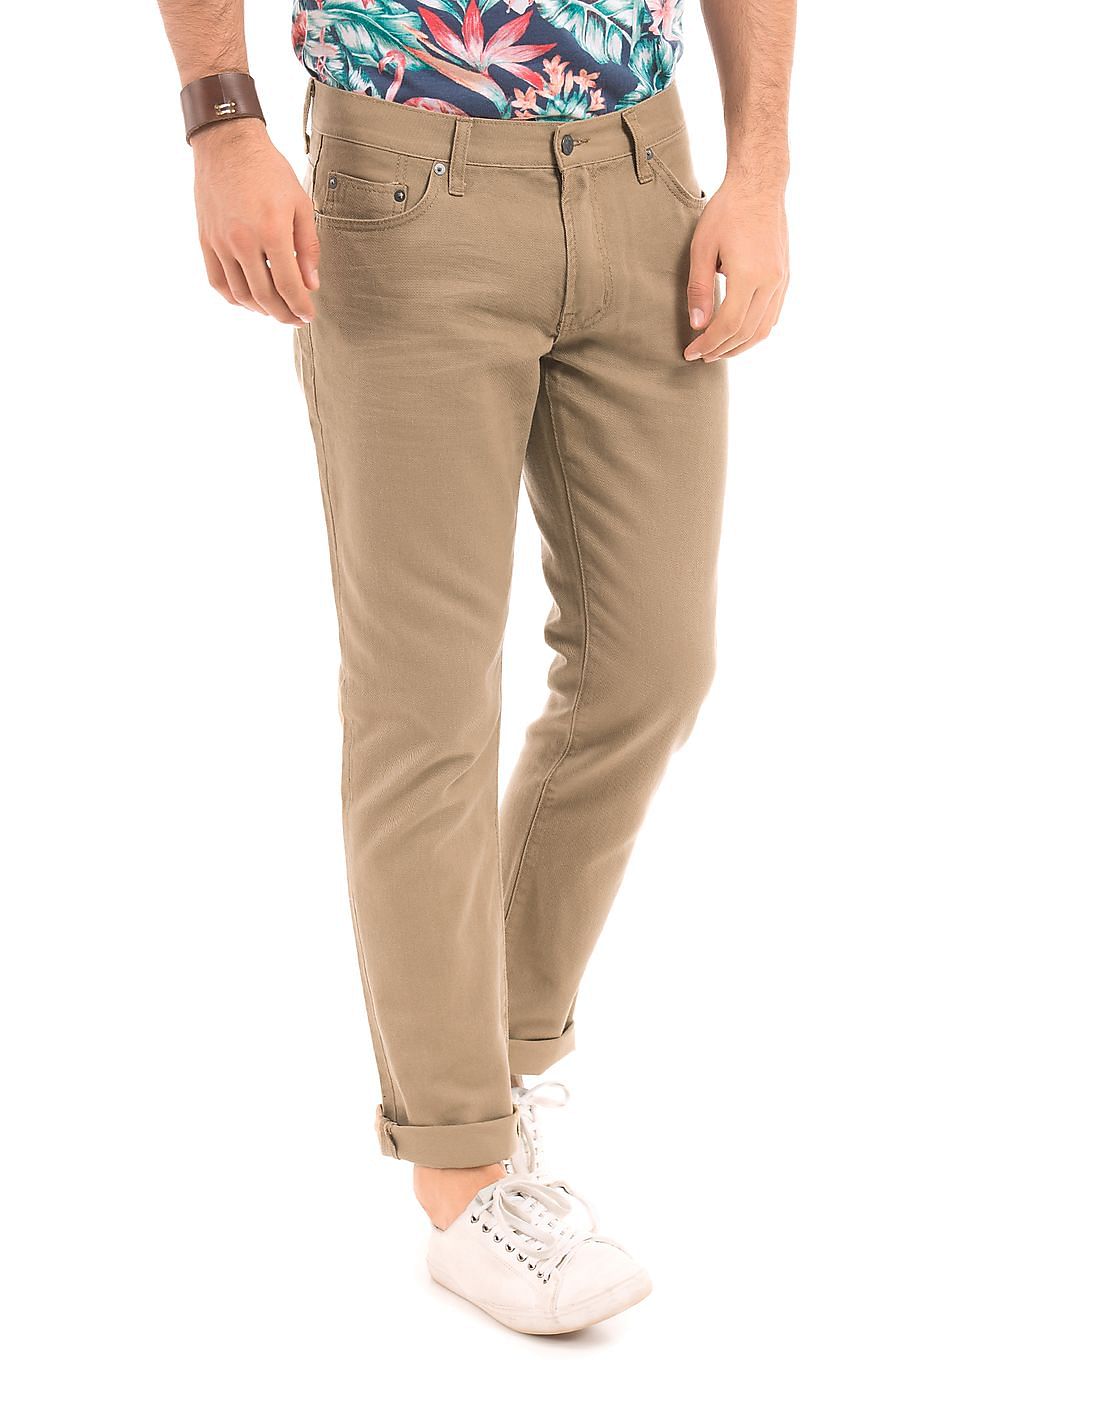 Buy Aeropostale Men Skinny Fit Wrinkled Jeans - NNNOW.com